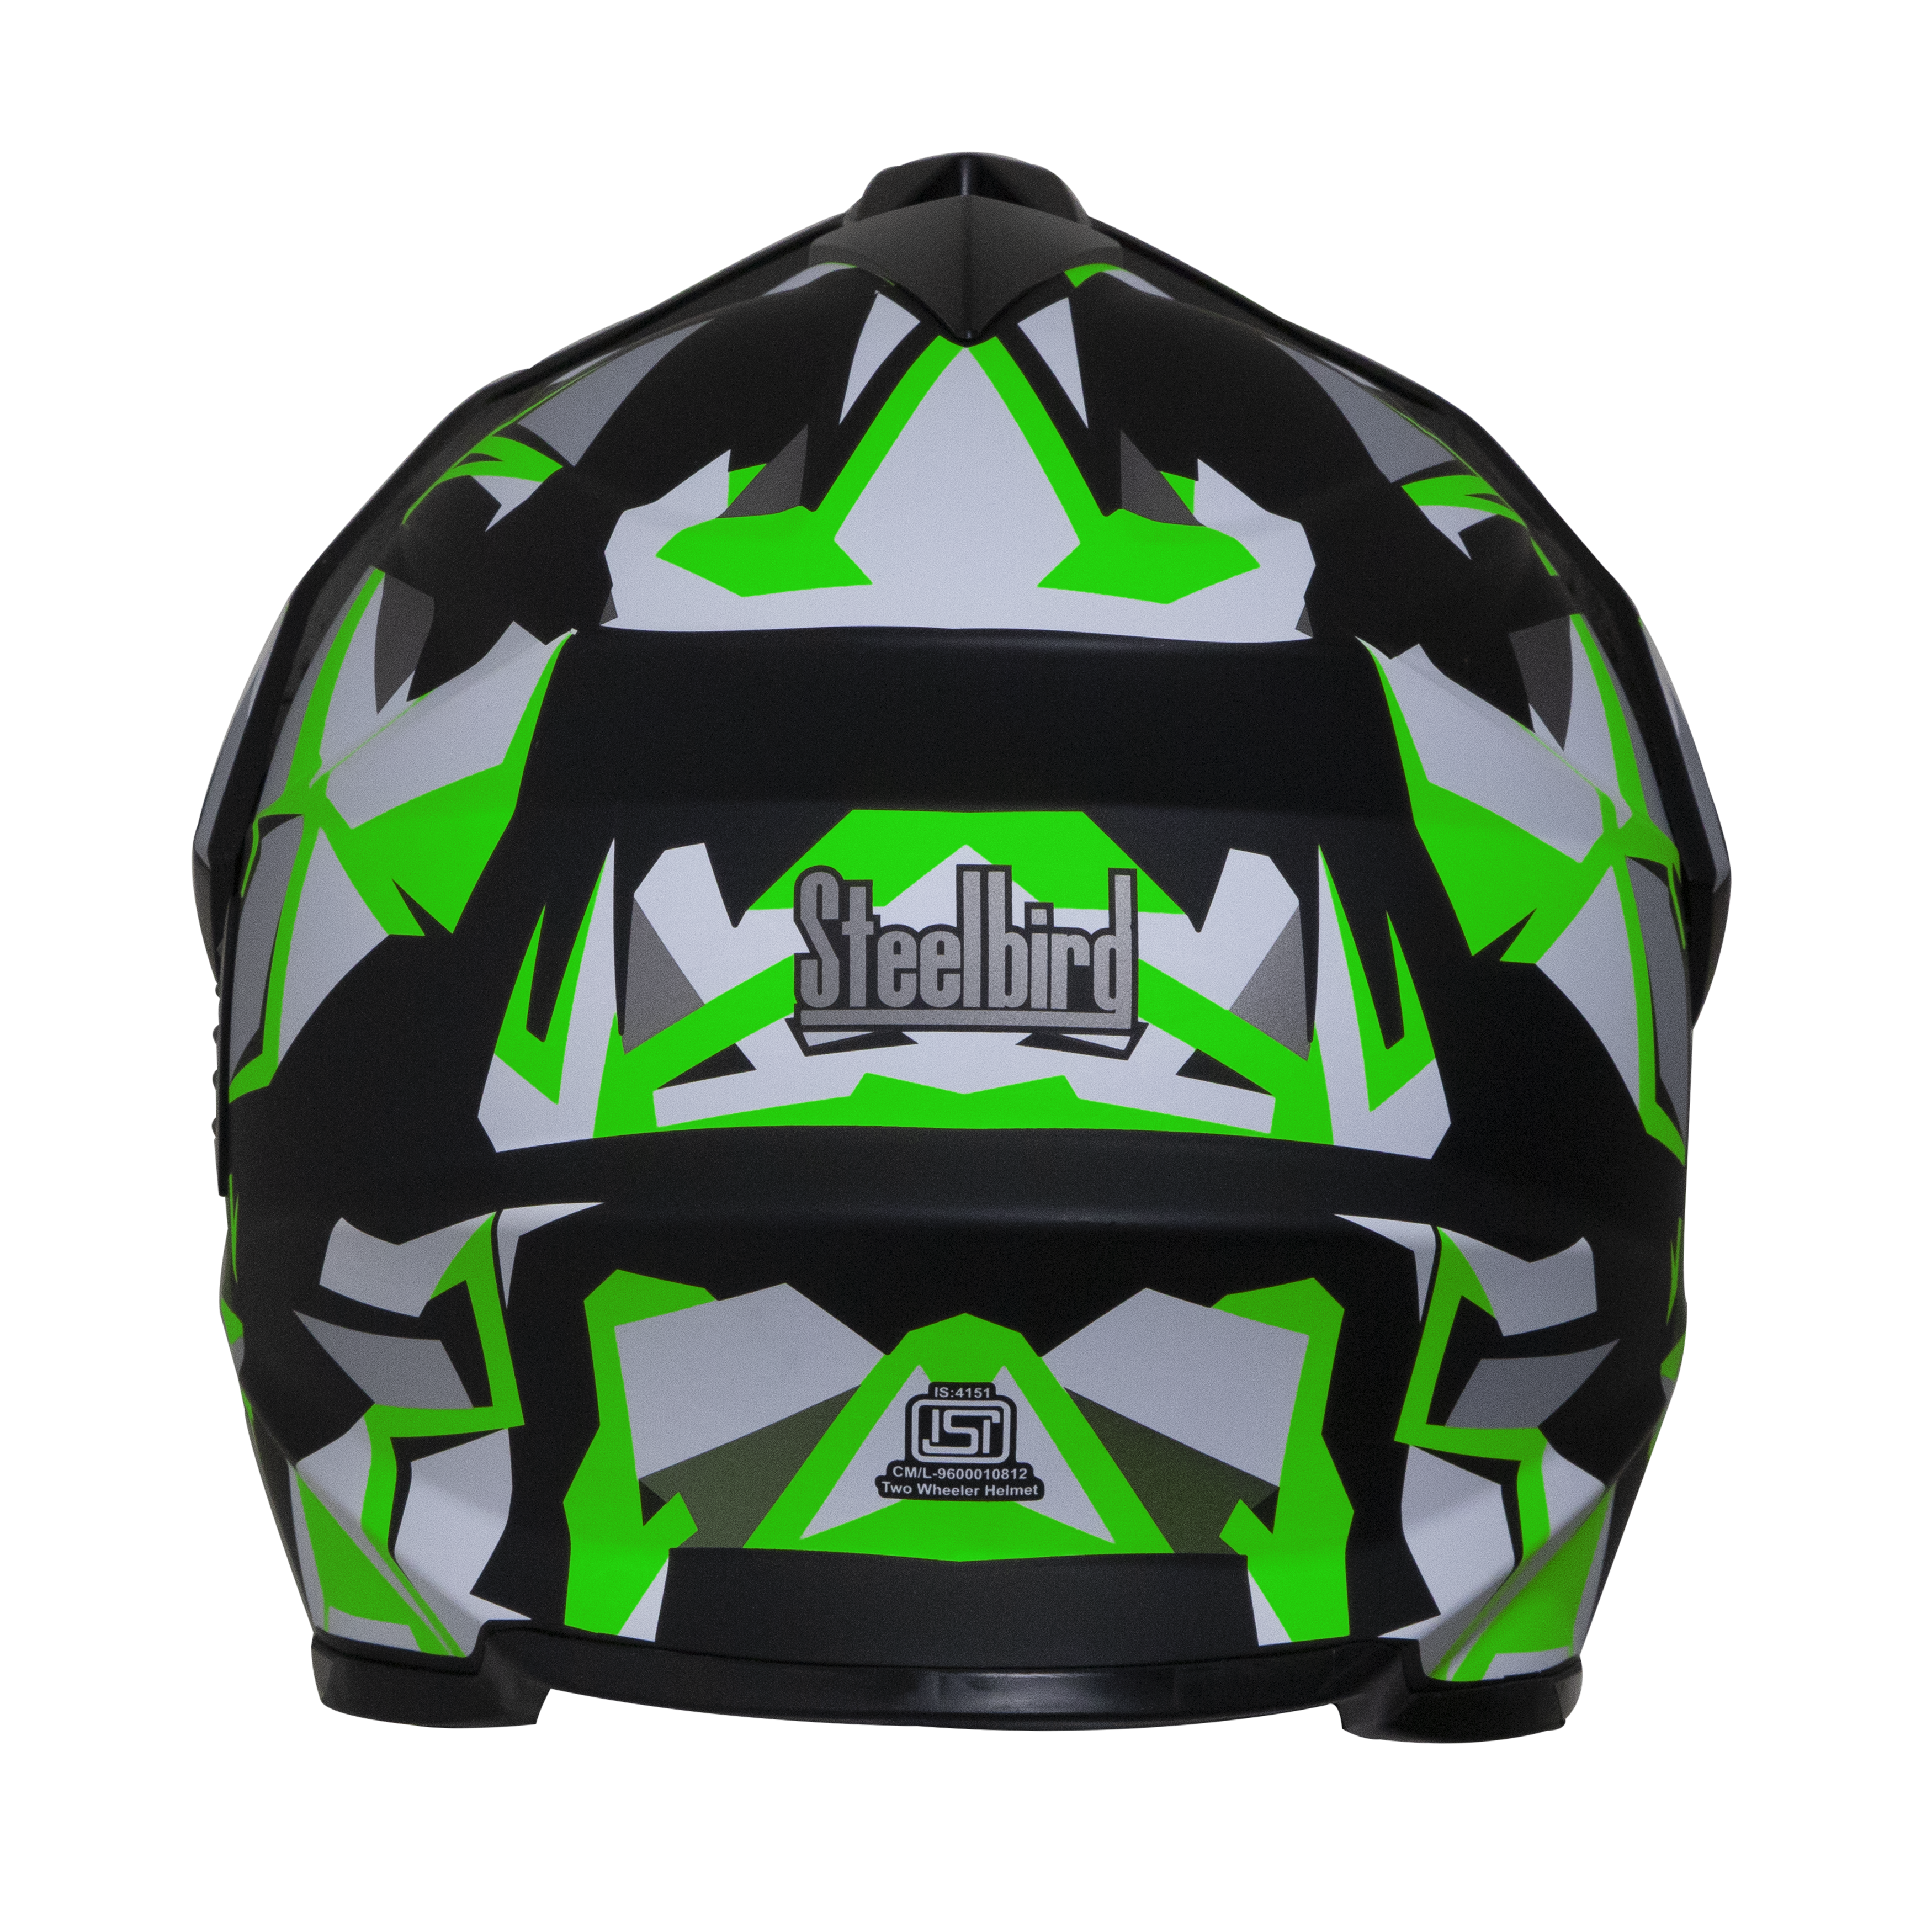 Steelbird Off Road Bang KTN ISI Certified ABS Material Shell Motocross Helmet With Inner Chrome Silver Sun Shield (Matt Black Green)